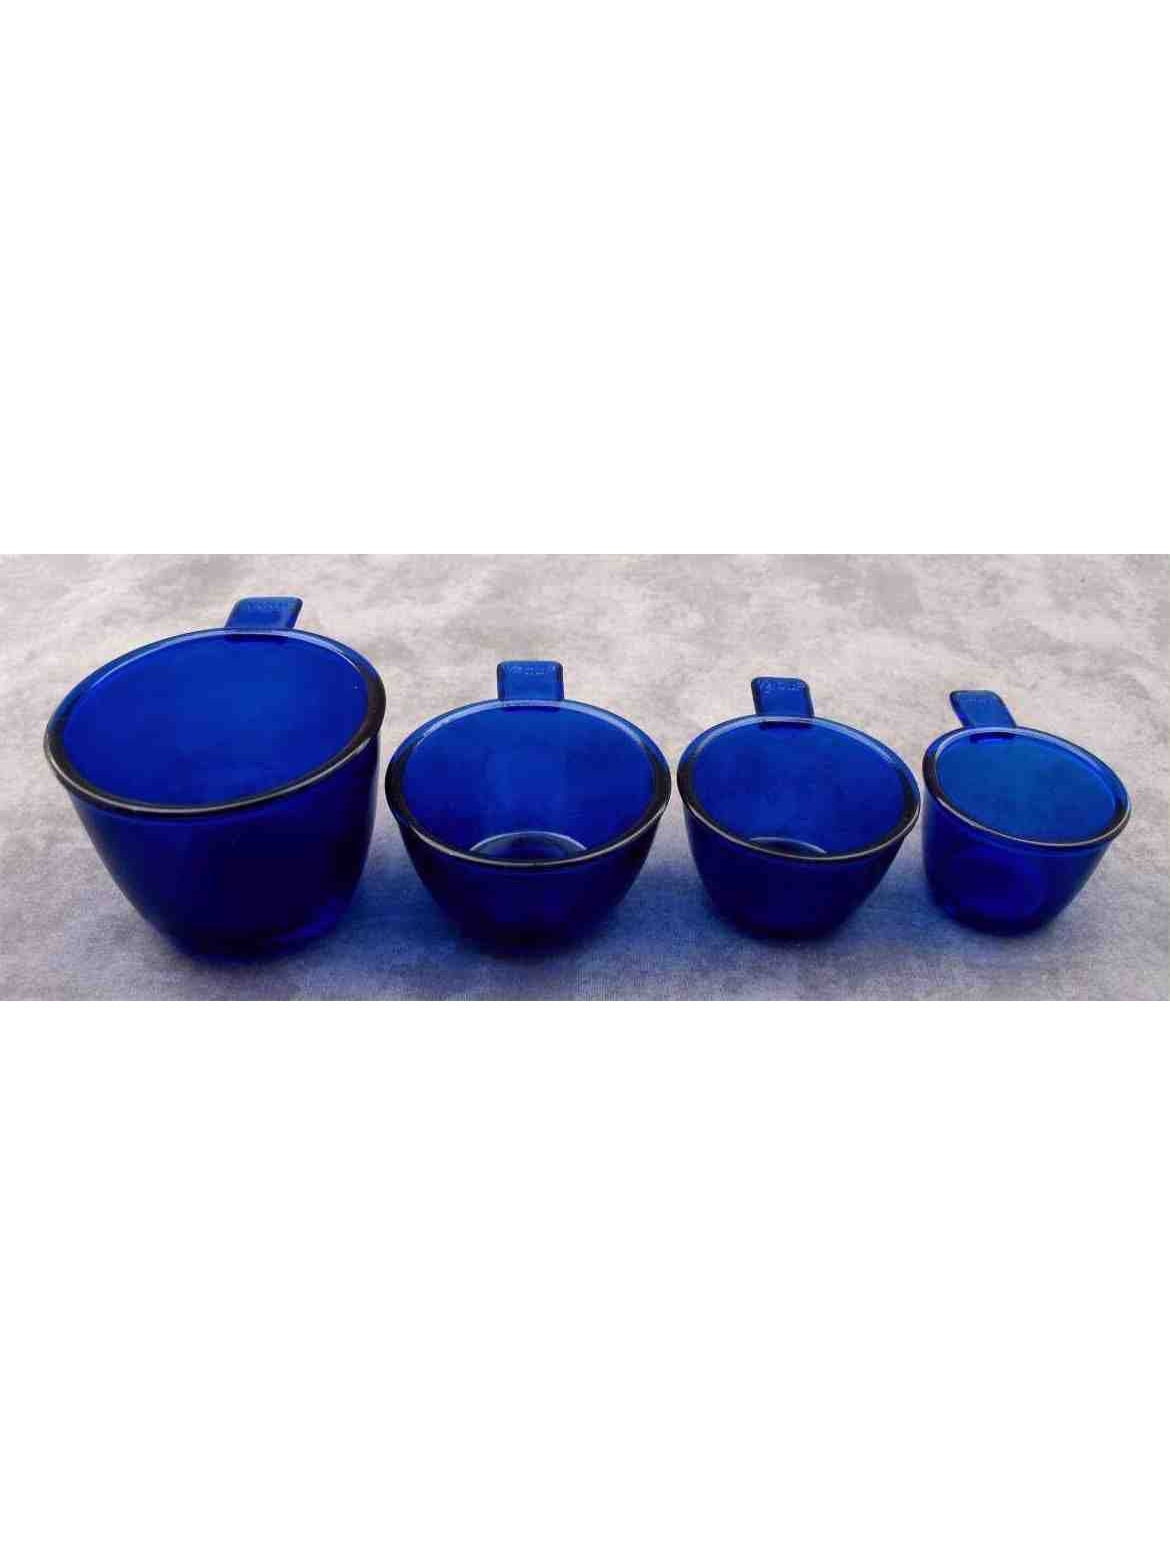 RARE Sur La Table Colorful Fun Ceramic Cat Measuring Cups Bowls 4 piece Set  EUC